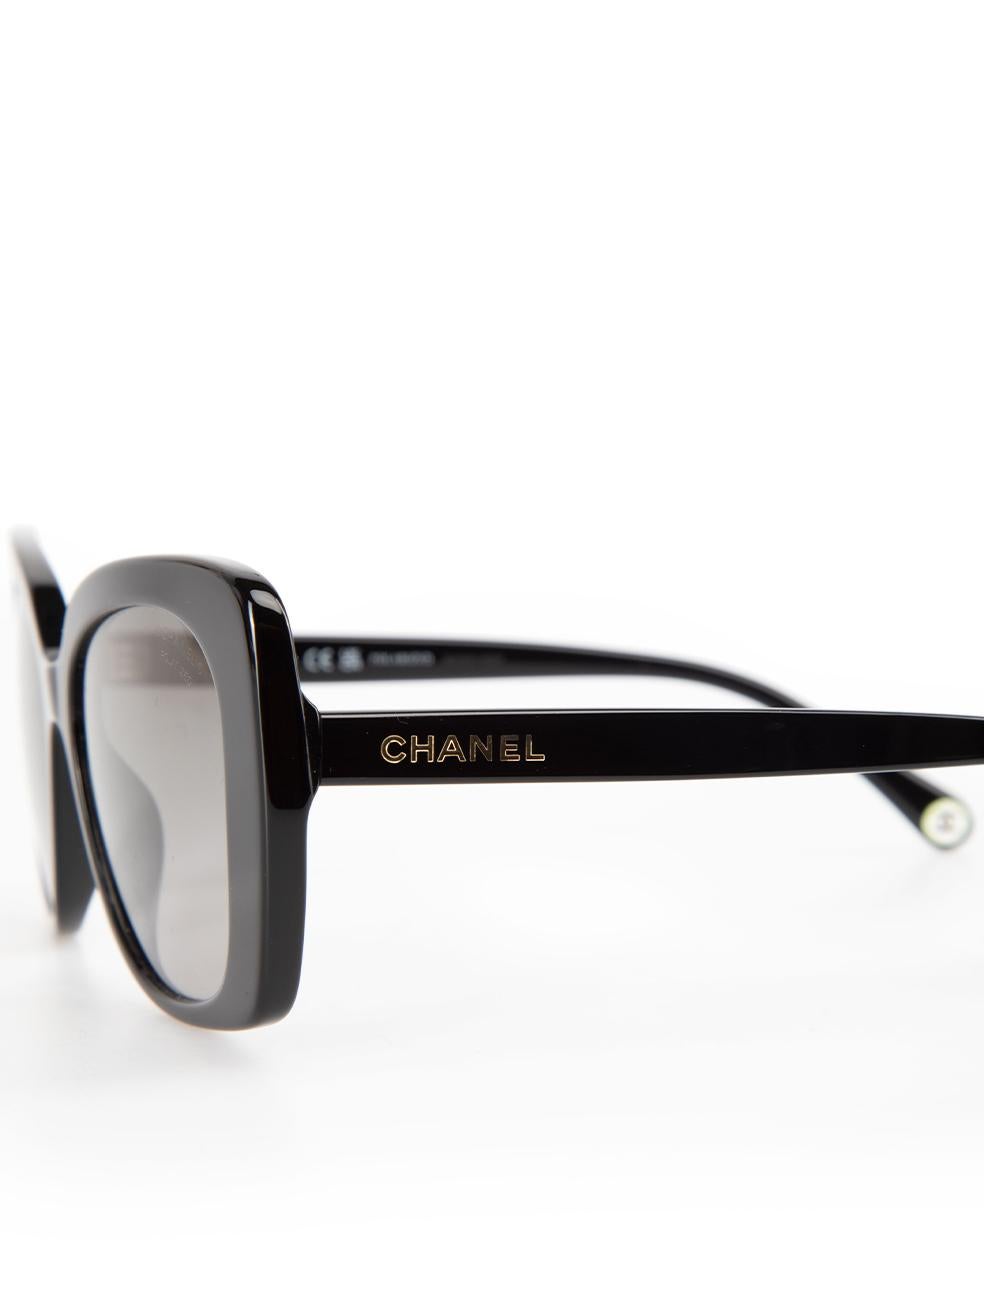 Chanel Black Rectangle Sunglasses For Sale 2